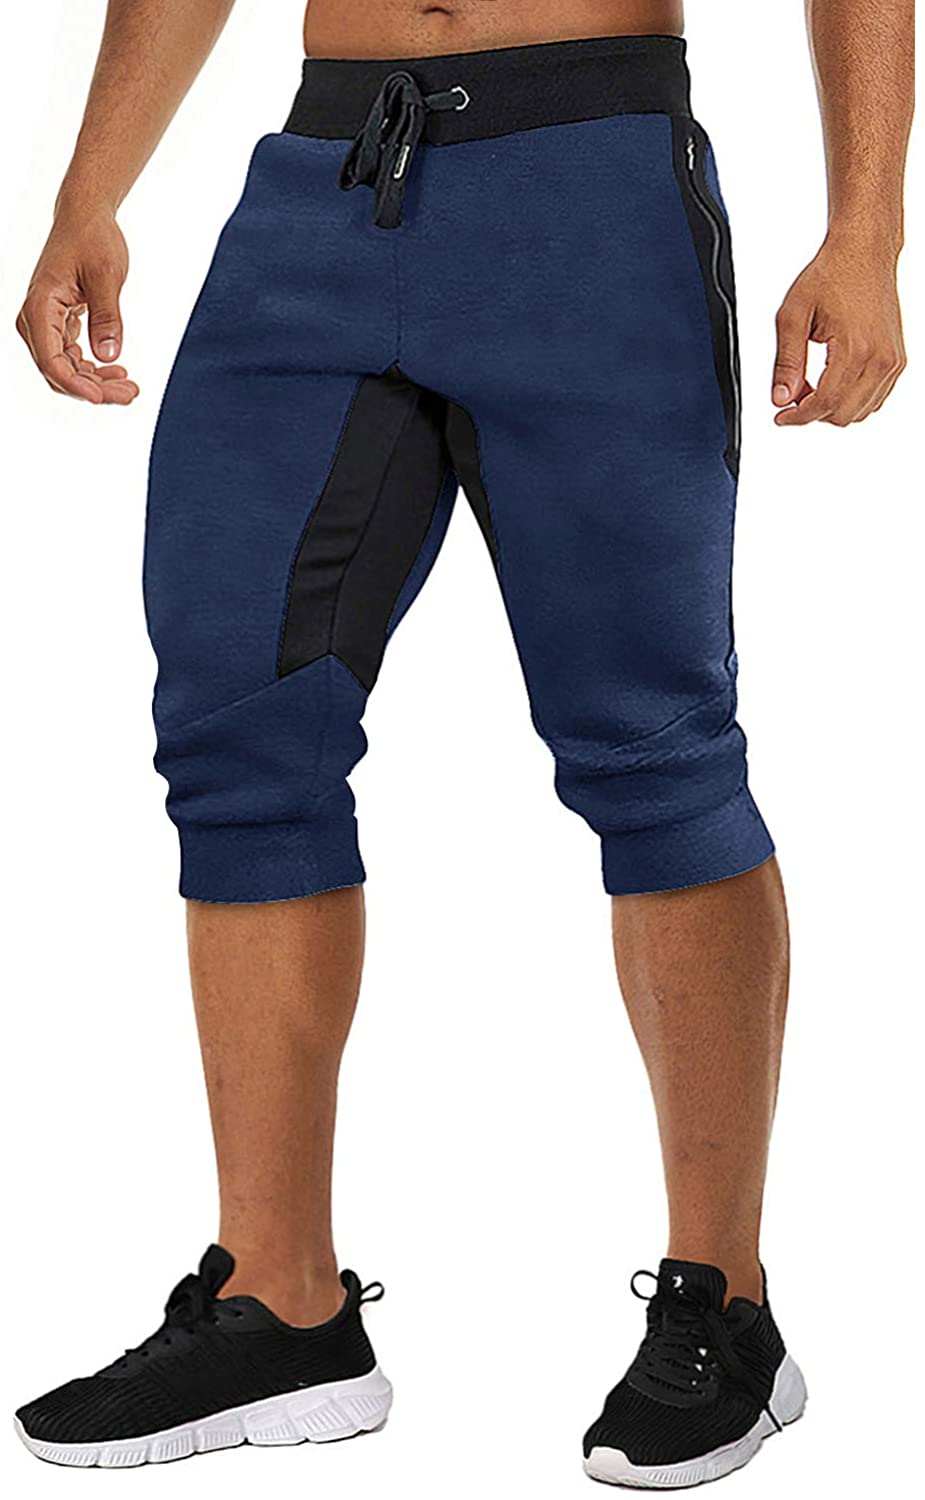 KEFITEVD Mens Summer 3/4 Running Shorts Breathable Sport Short Pants Knee Length Jogger Shorts with Zipper Pockets 